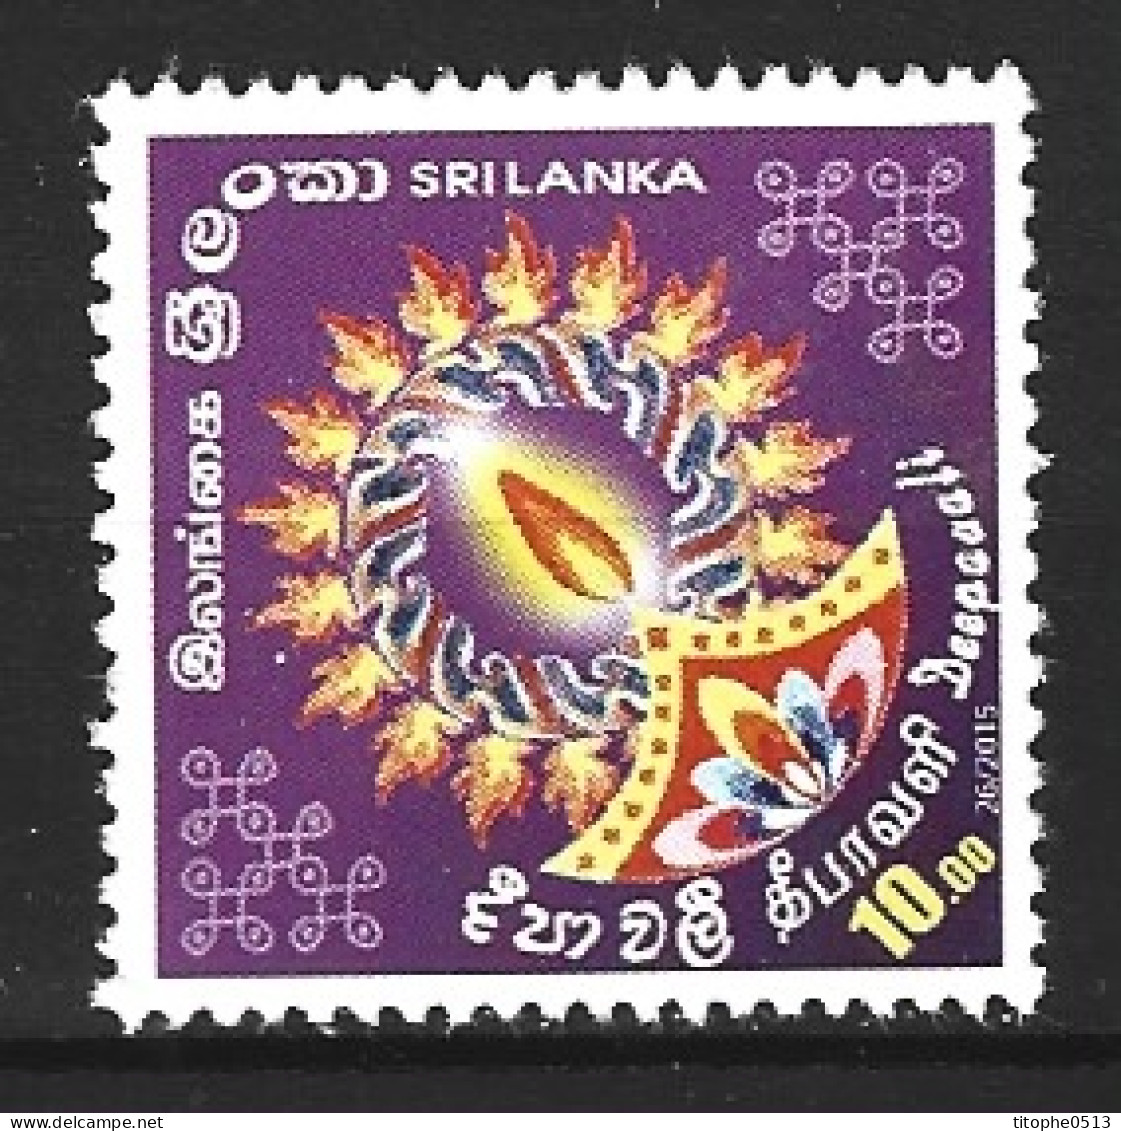 SRI LANKA. N°2000 De 2015. Diwali. - Induismo